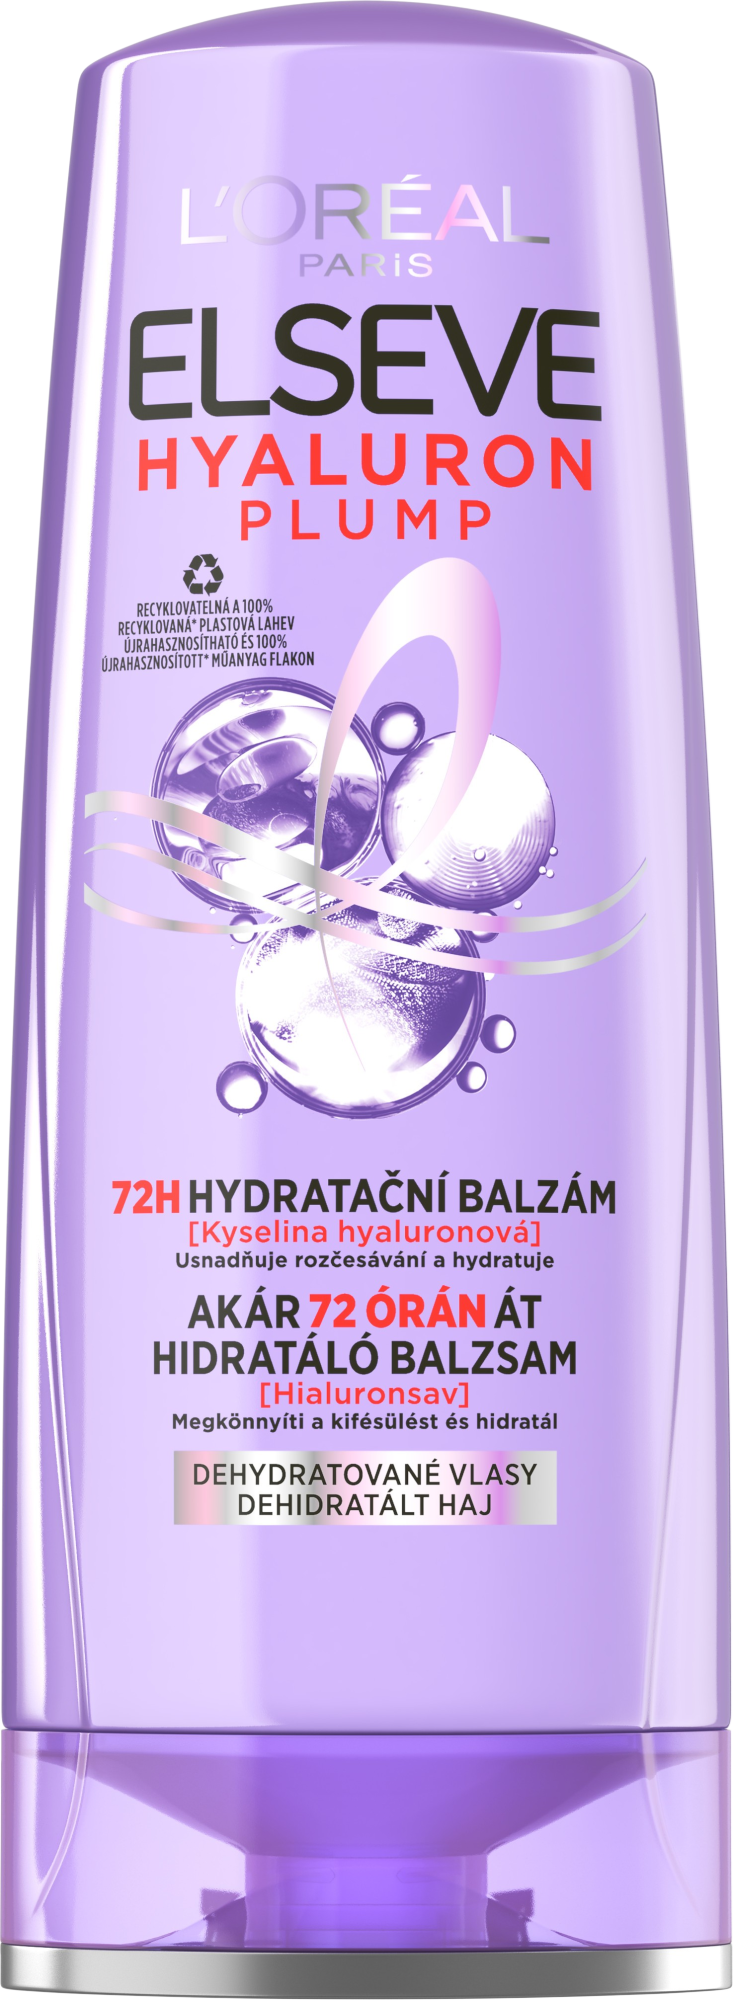 L'Oréal Paris Elseve balzam hydratačný Hyaluron Plump 72H , 300 ml